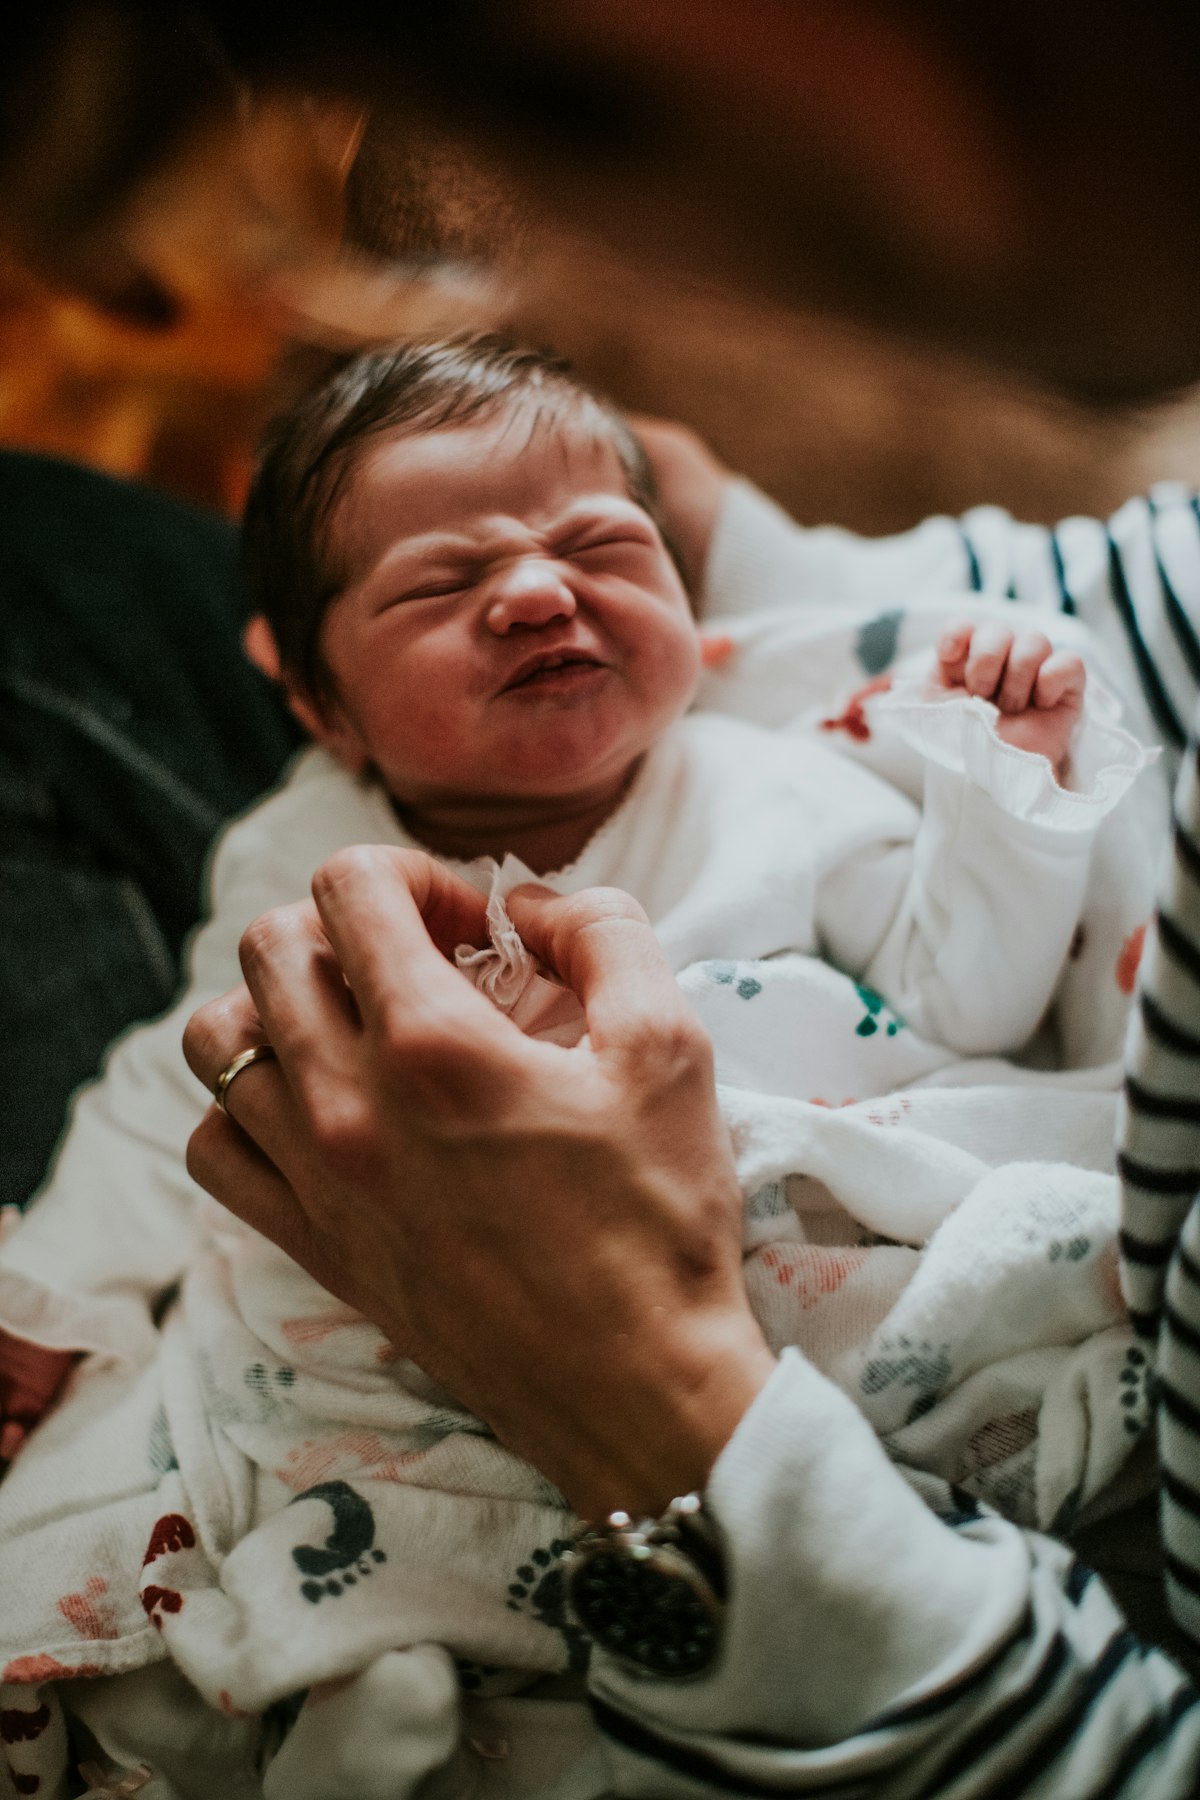 Natural-born marketers: "Crying Babies"